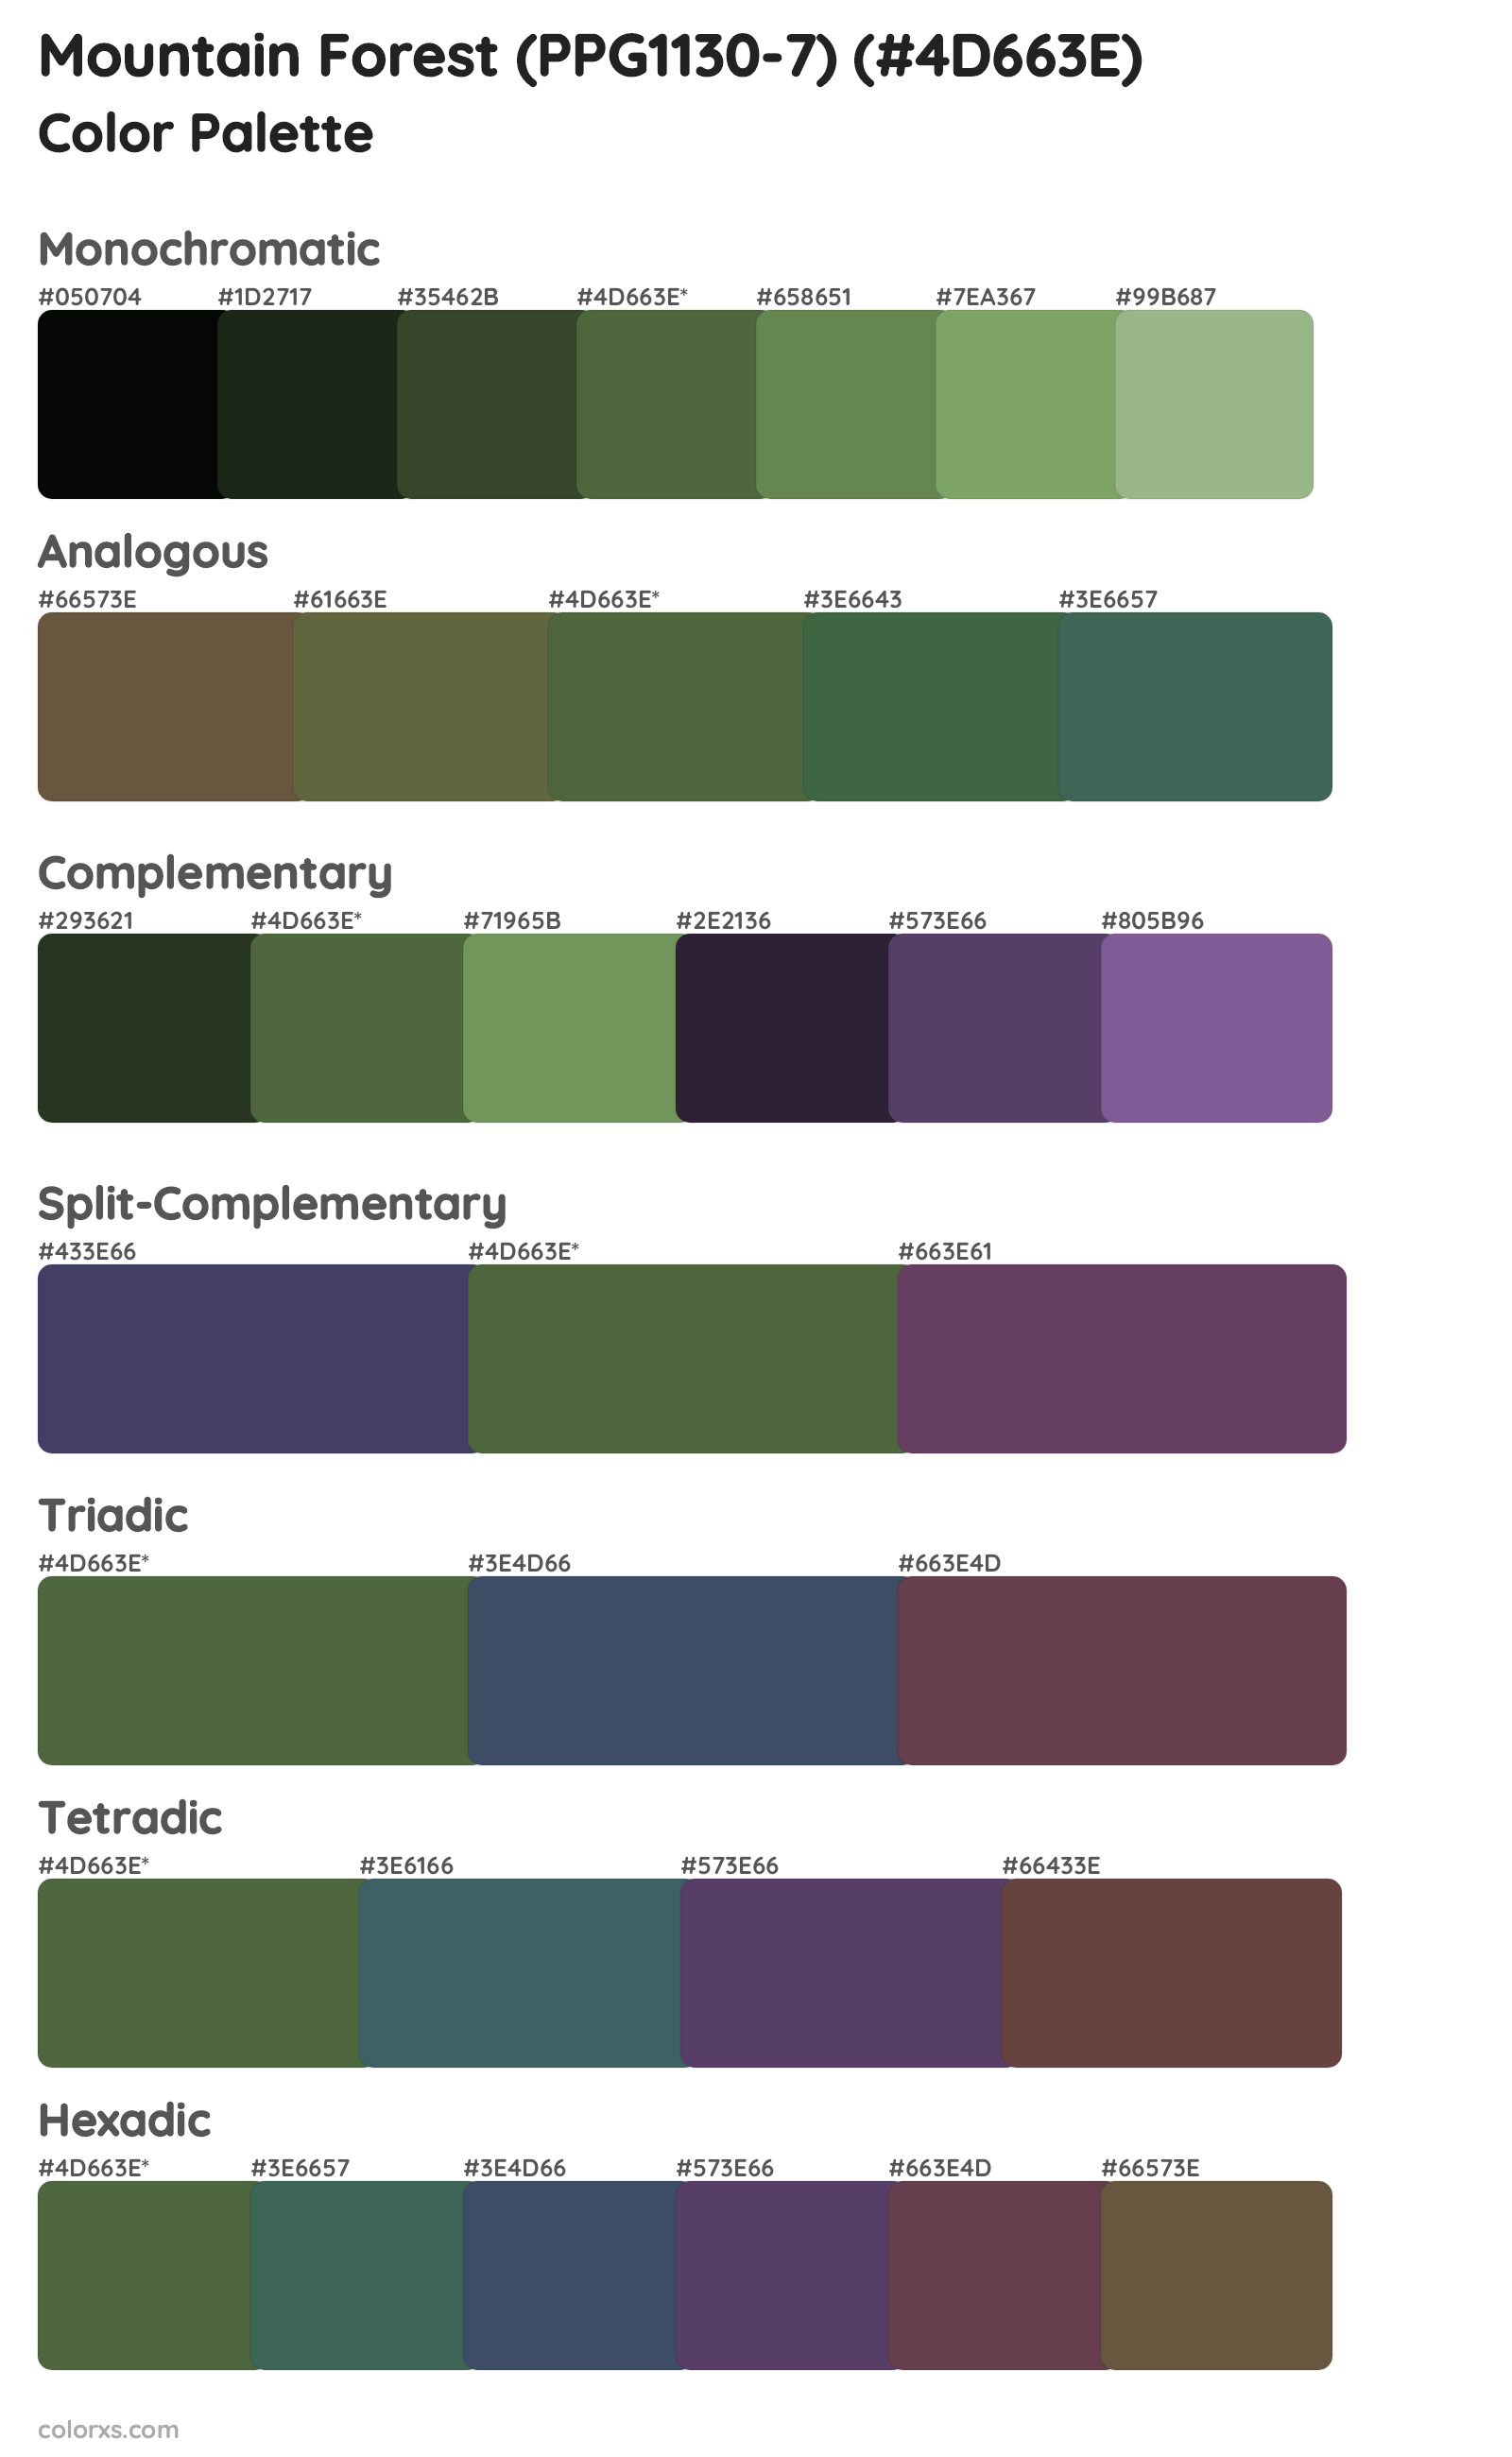 Mountain Forest (PPG1130-7) Color Scheme Palettes